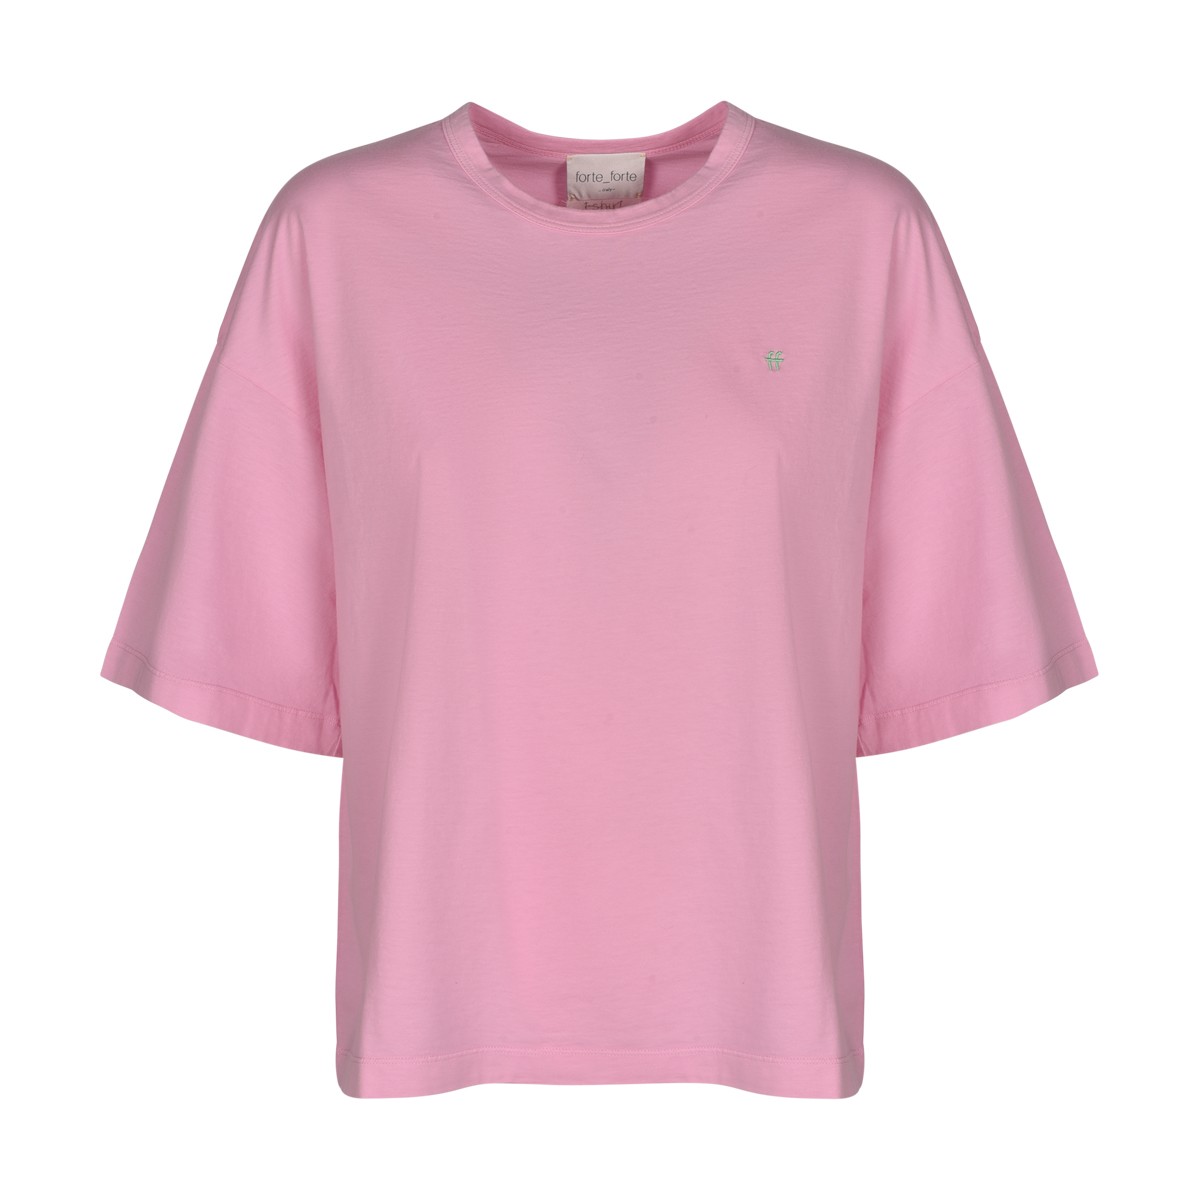 Marshmallow Pink Cotton T-Shirt